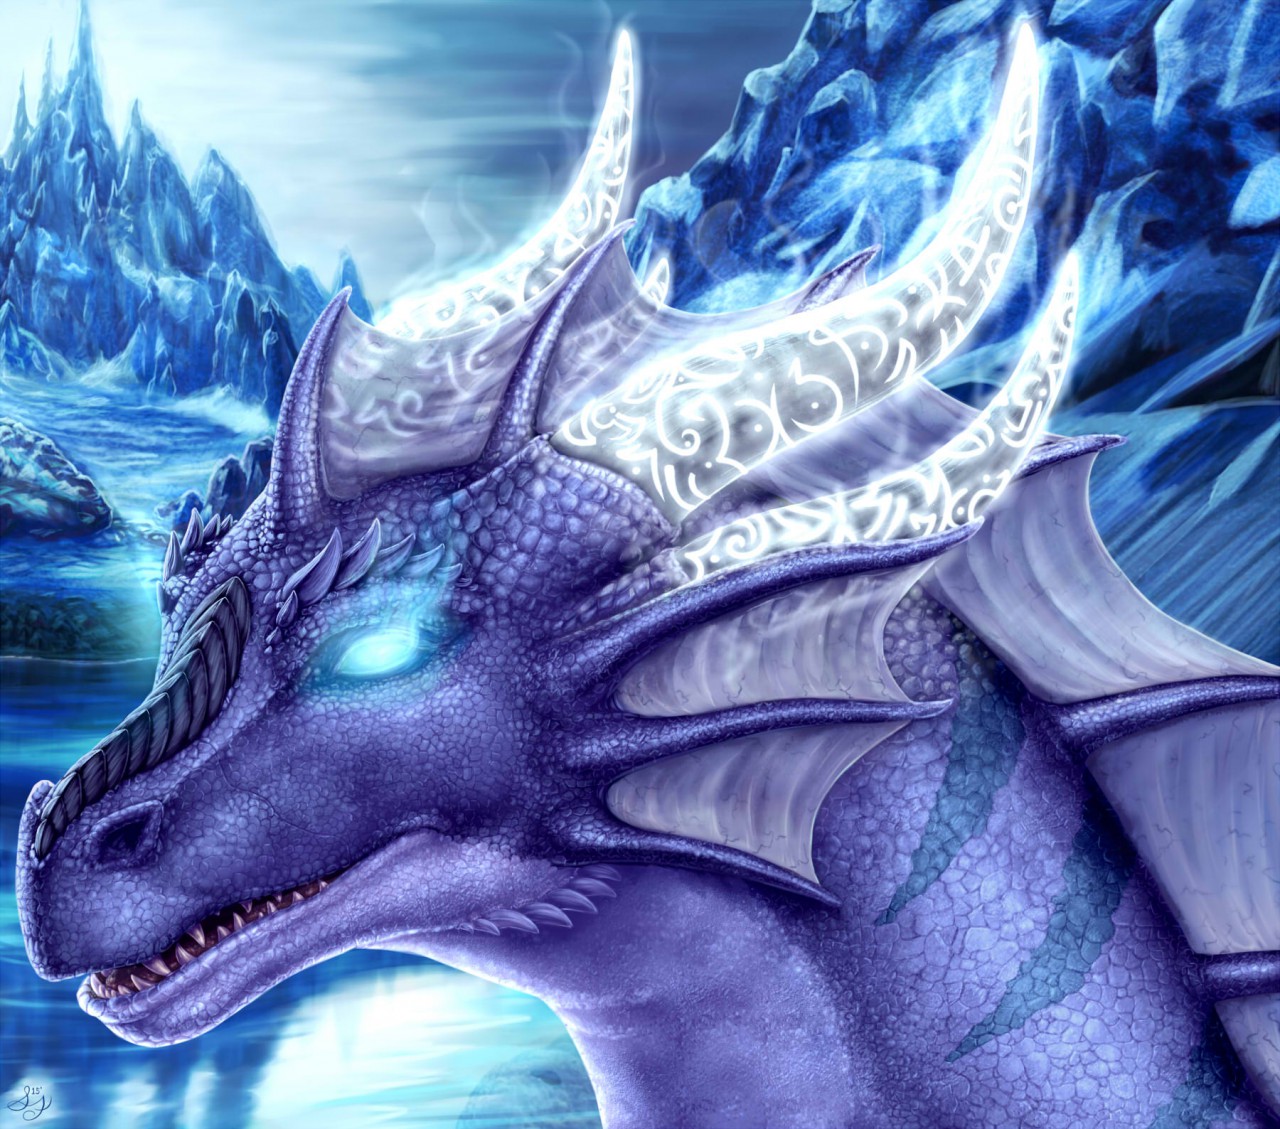 Голова дракона на снегу. Фрост дракон. Ледяной Фрост дракон. Арт Фрост драгон. Голова дракона.